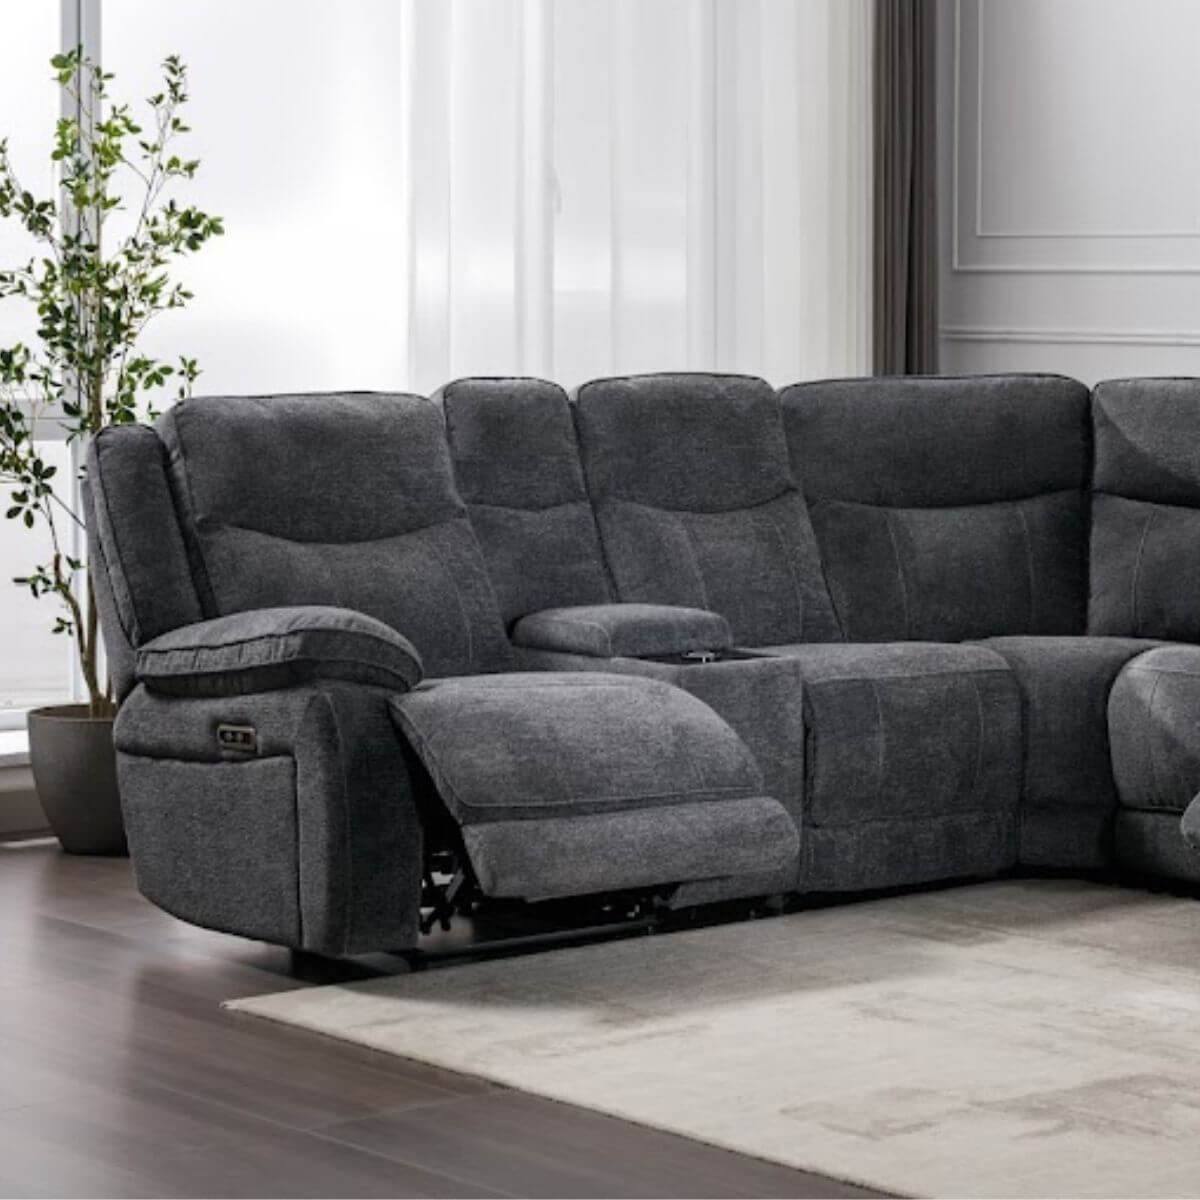 Herbert Corner Sofa With Electric Recliners - Dark Grey